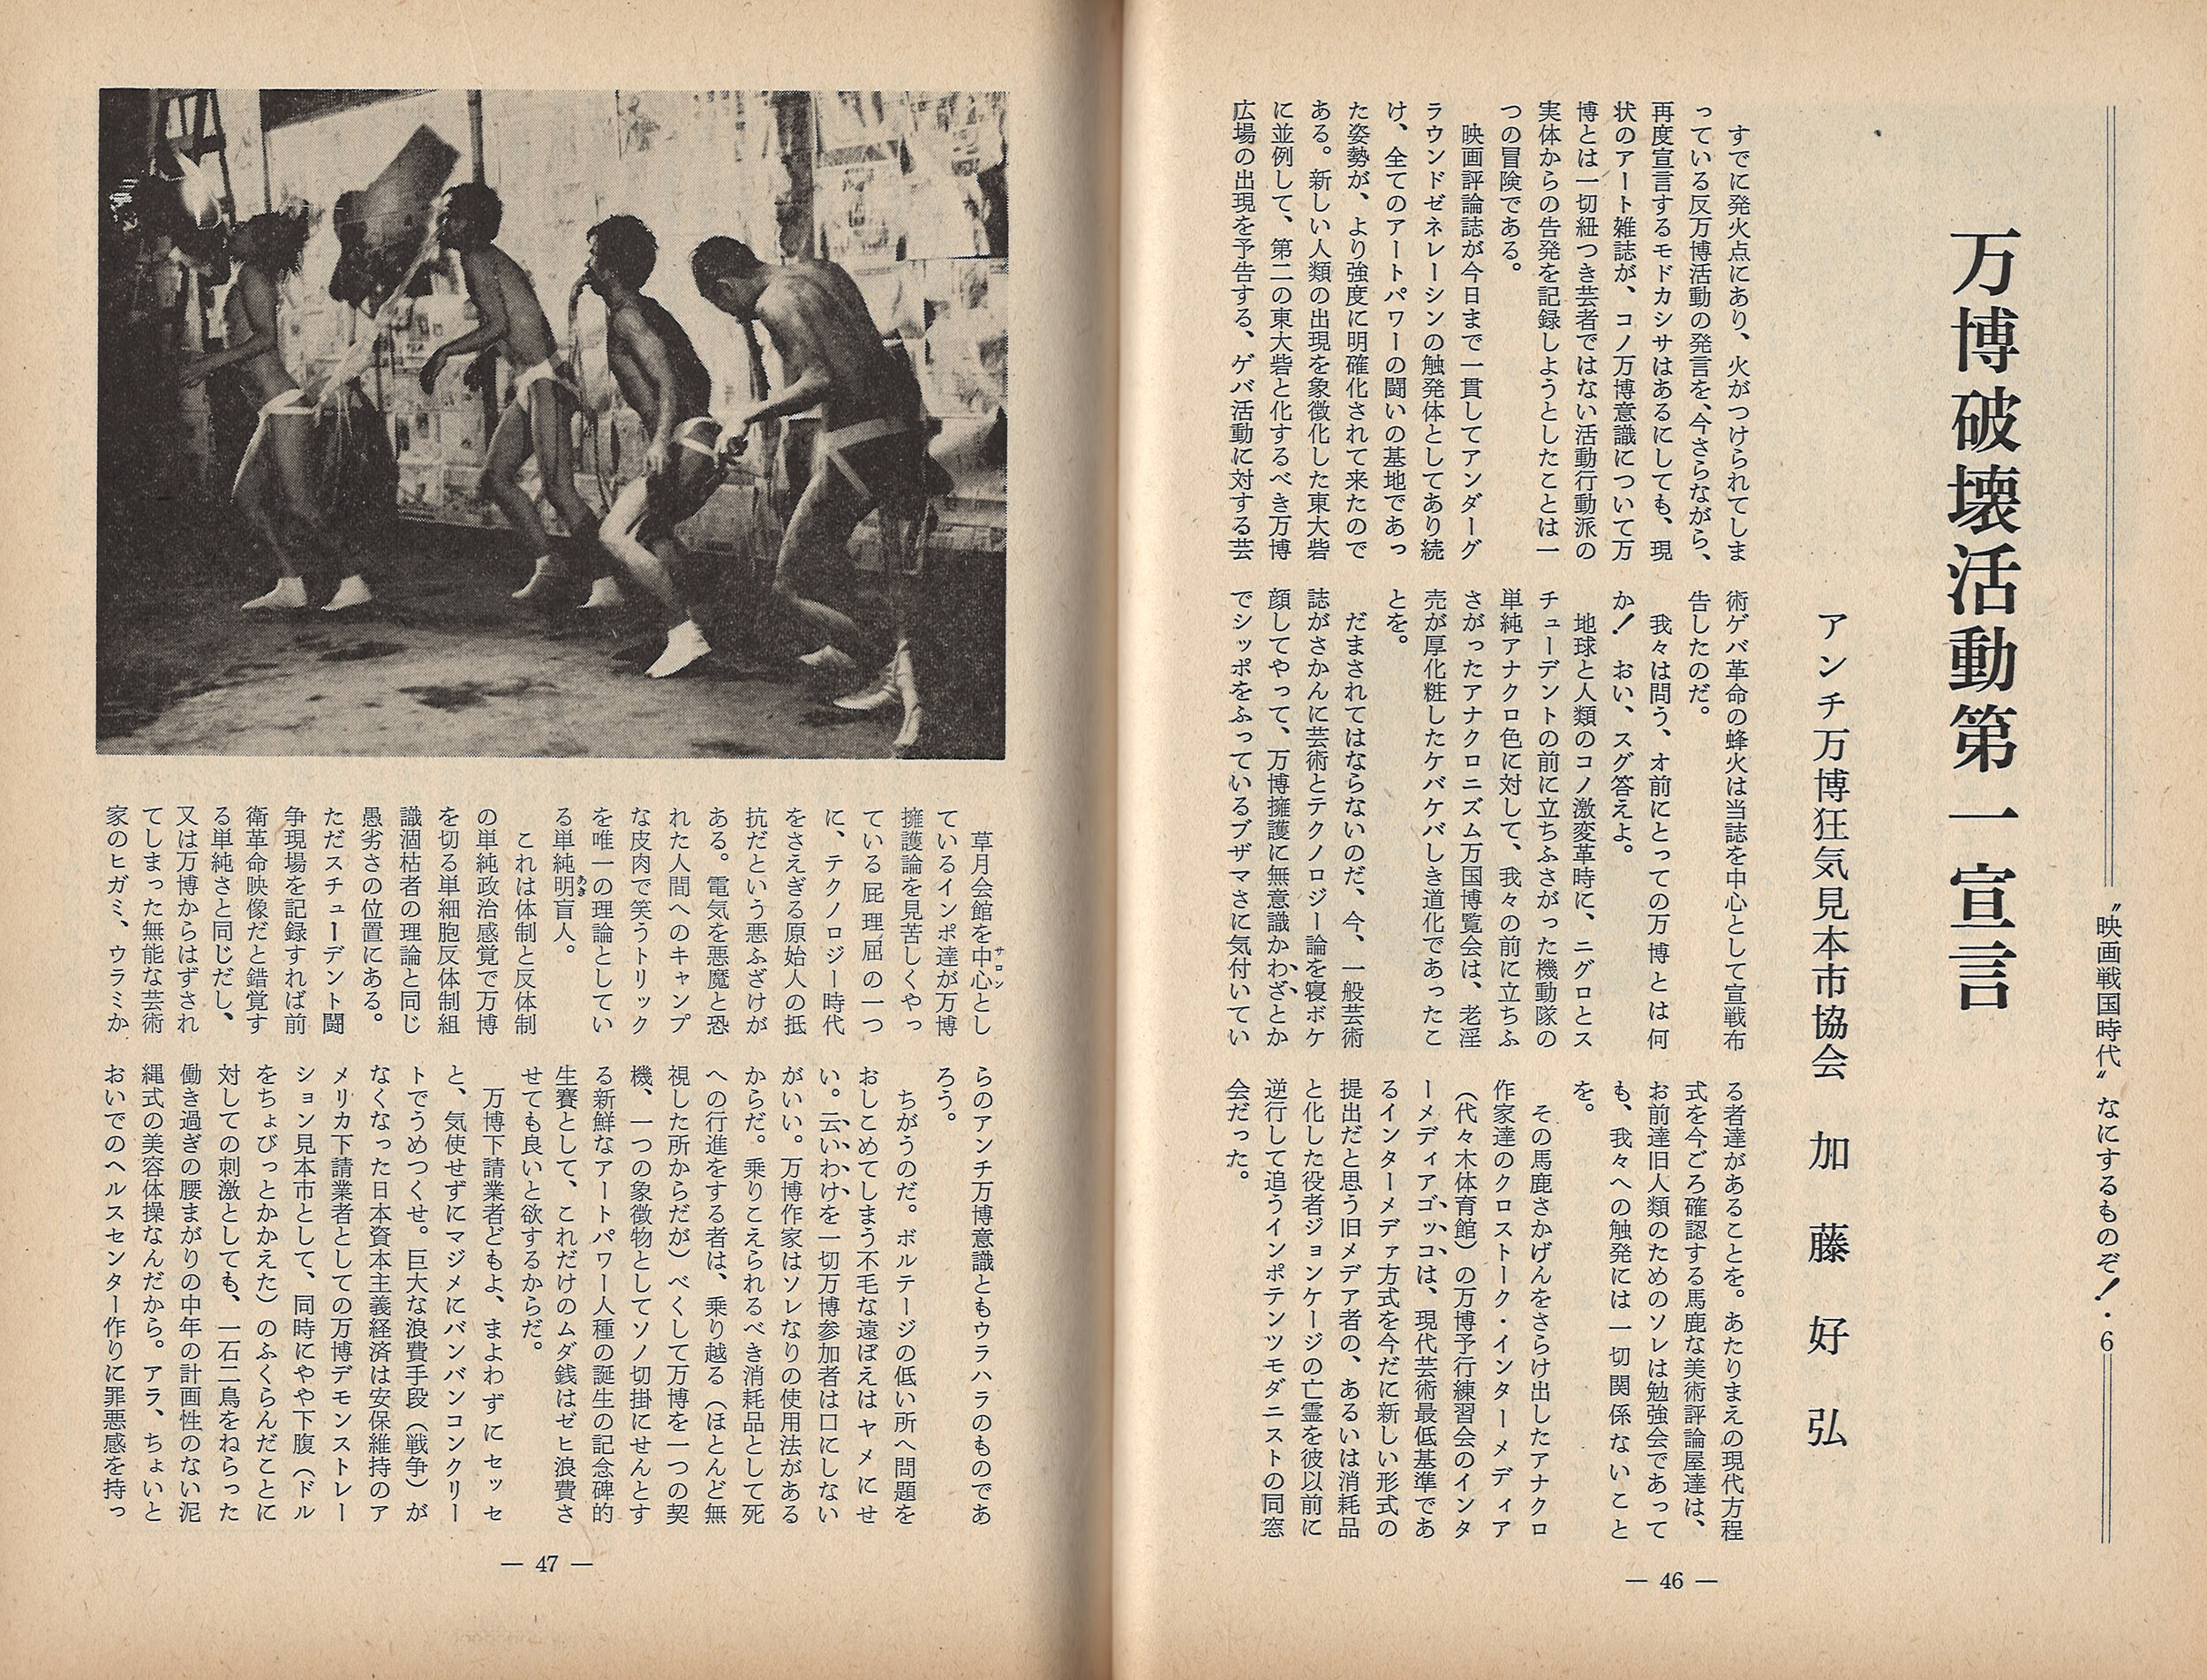  [fig. 11] “First Masnifesto of Expo Destruction Action” in  Eiga Hyōron  (Cinema criticism). May 1969. Collection of Zero Jigen Katō Yoshihiro Archive 